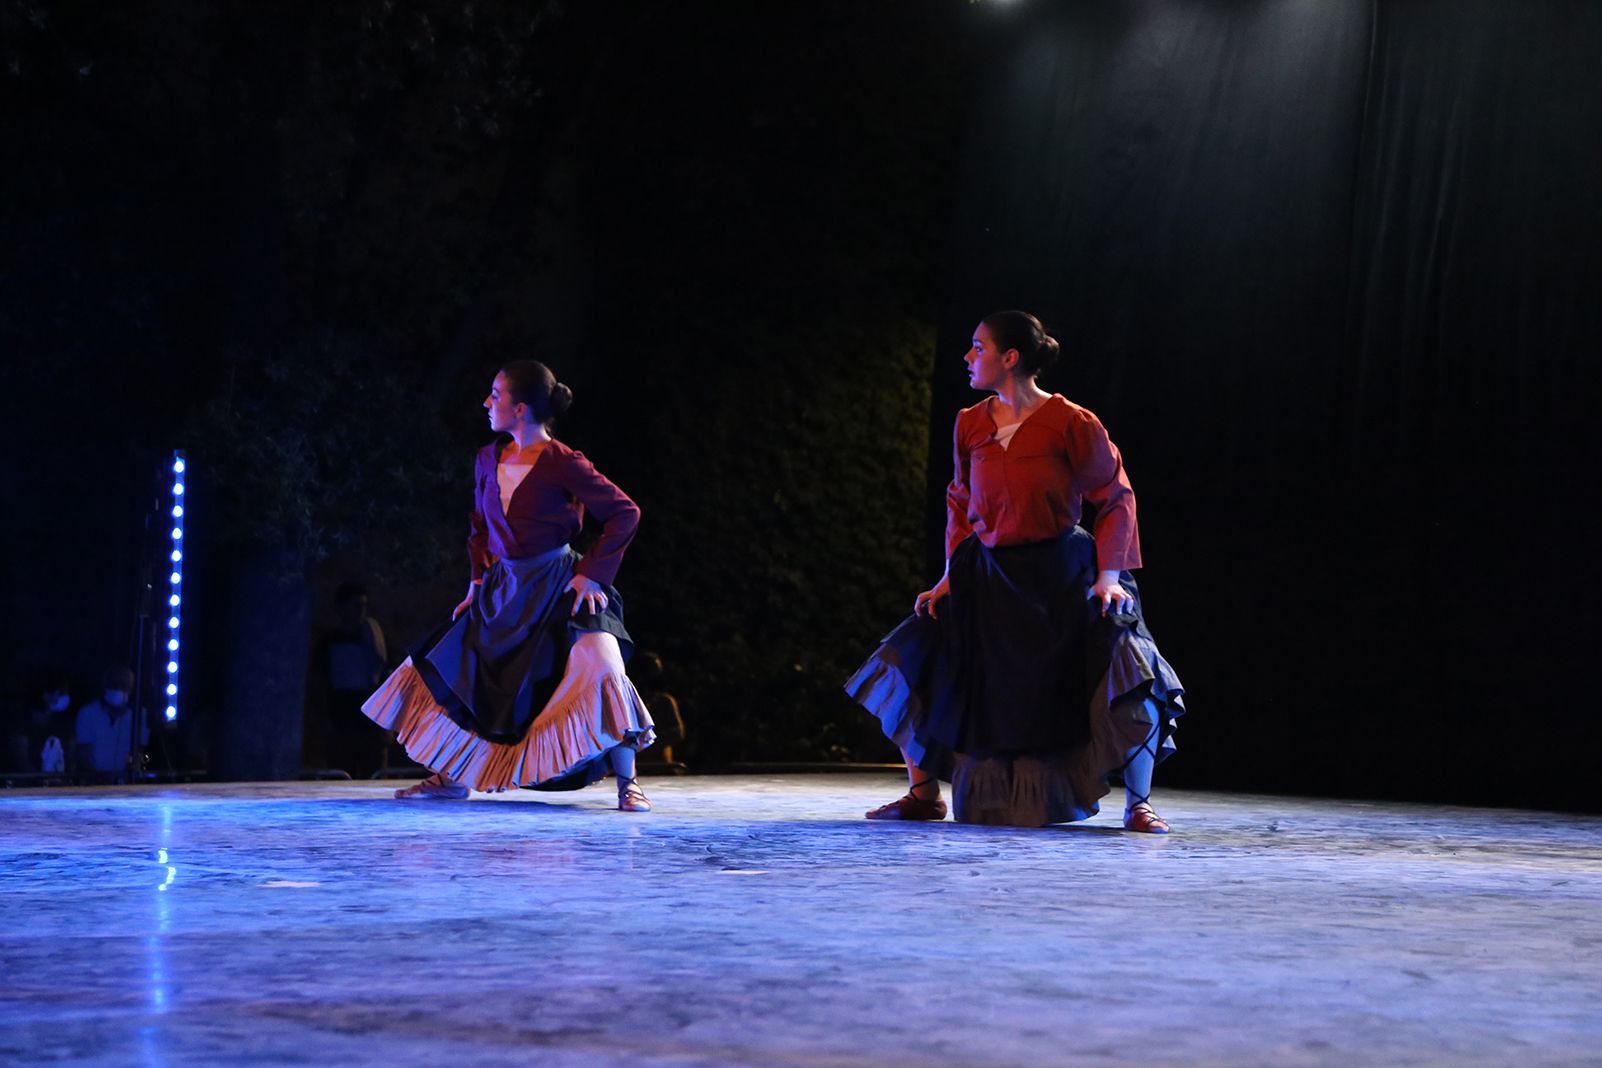 Espectacle "Temps de dansa" del Grup Mediterrània. Foto: Anna Bassa